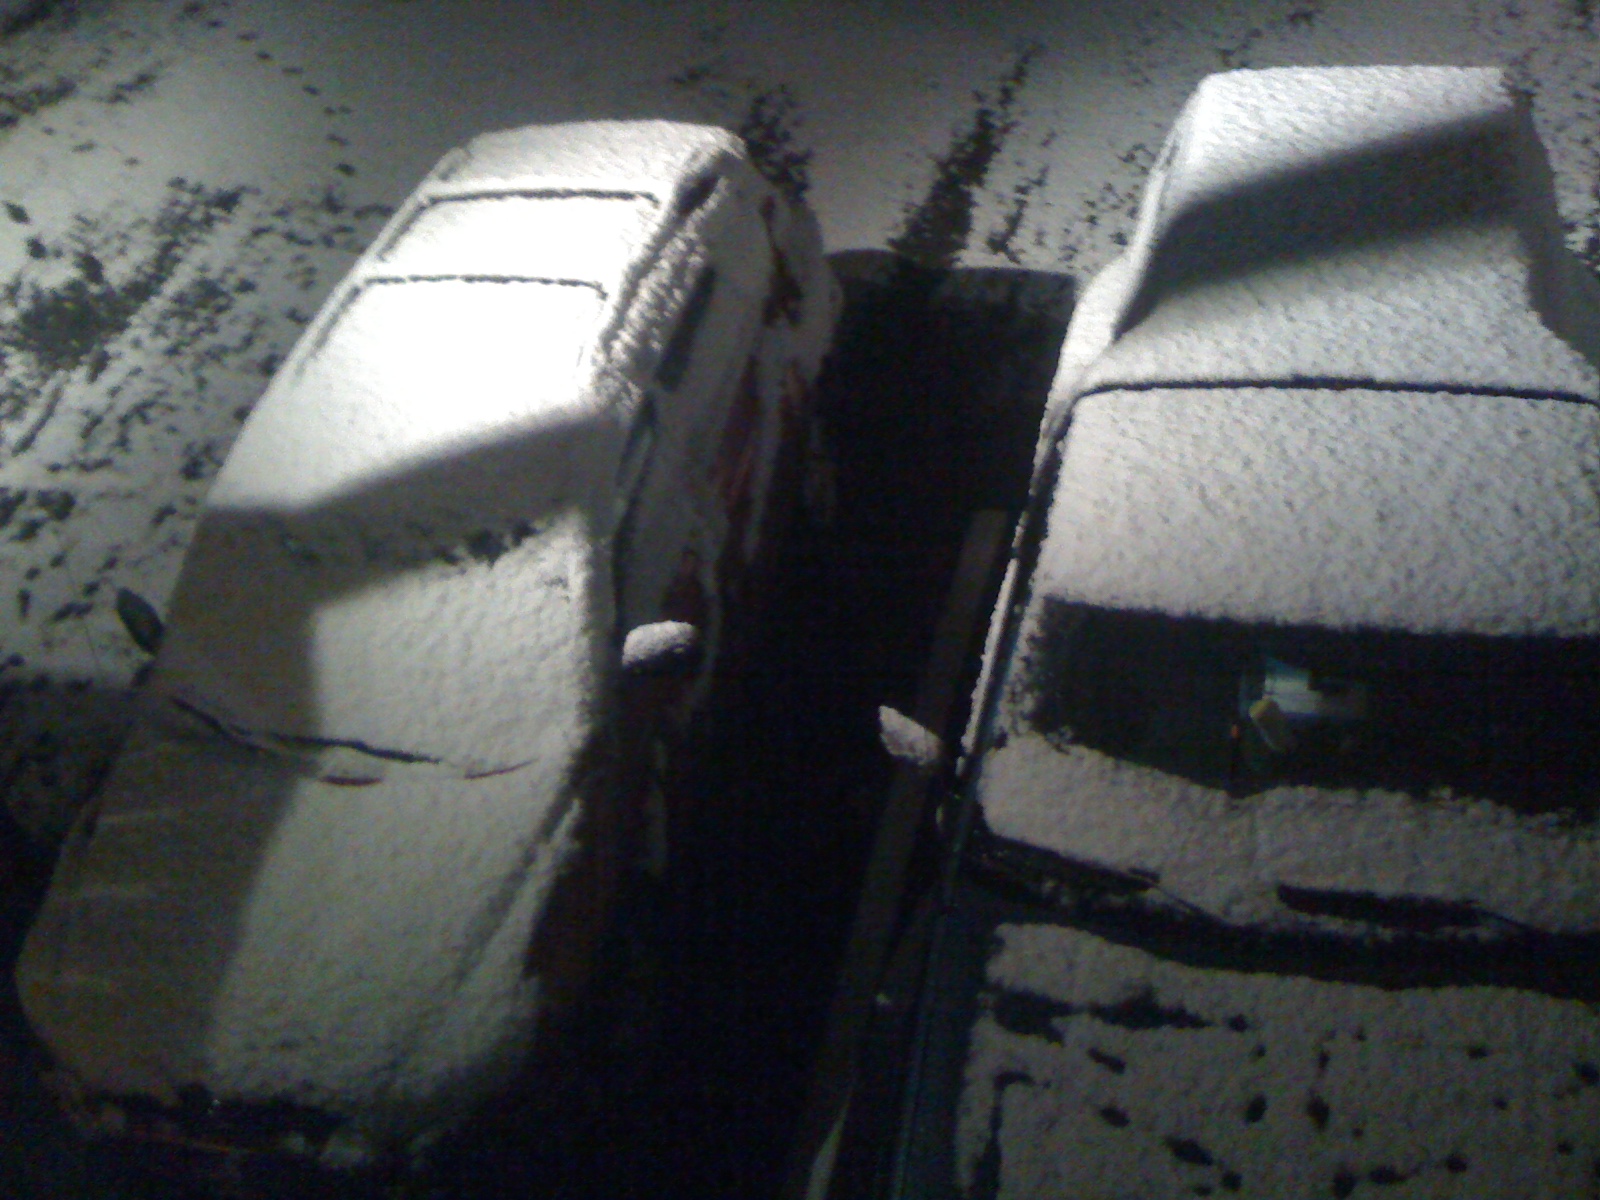 First major snow on the car (Wasilla, Alaska, October 29, 2010).